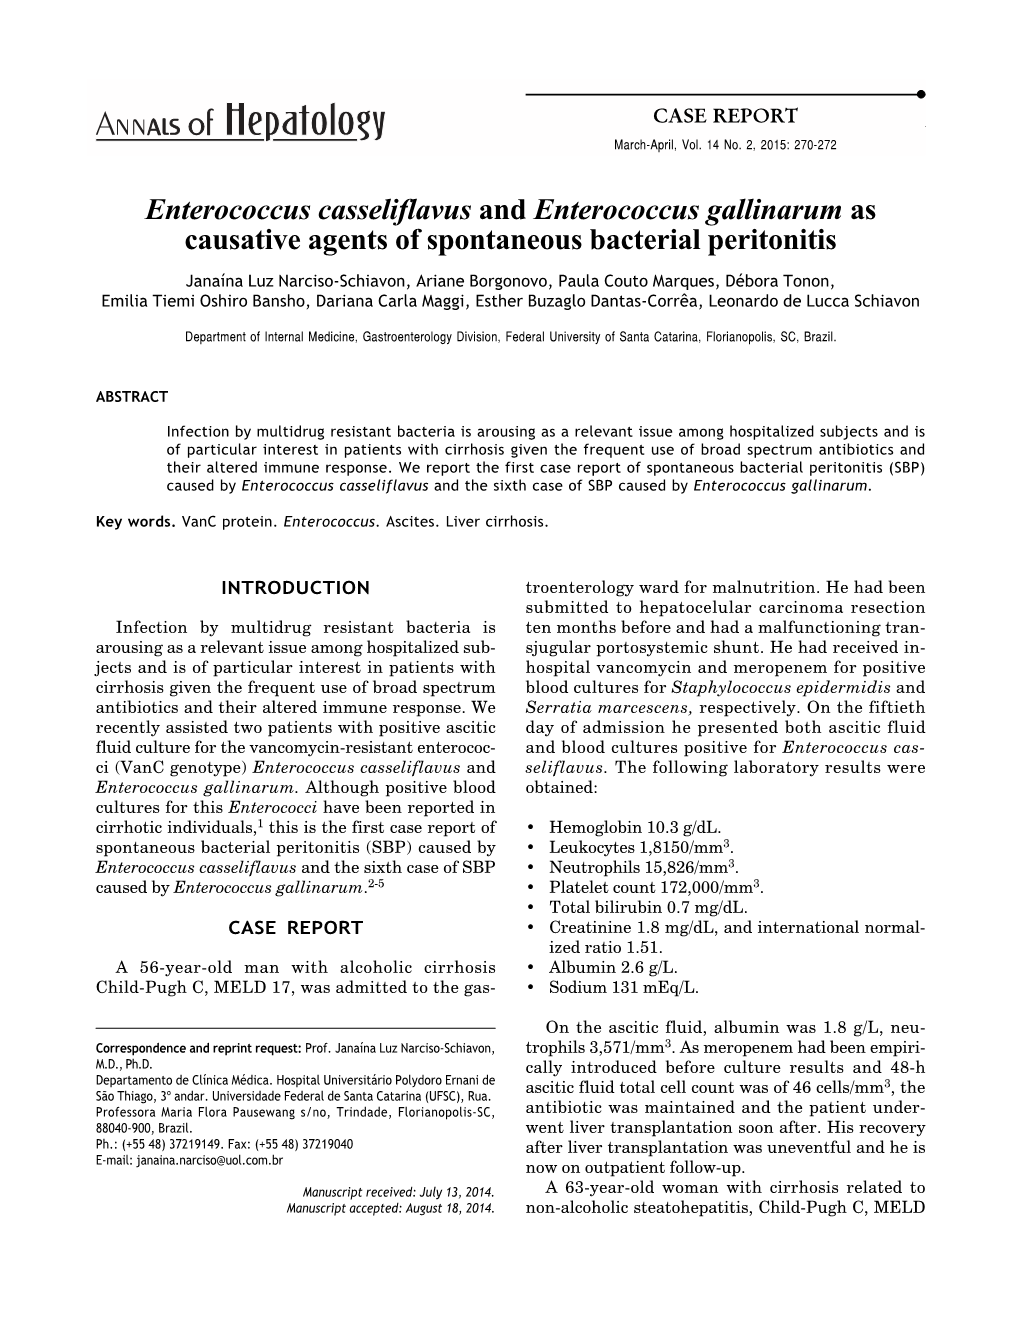 Enterococcus Casseliflavus and Enterococcus Gallinarum As Causative Agents of Spontaneous Bacterial Peritonitis